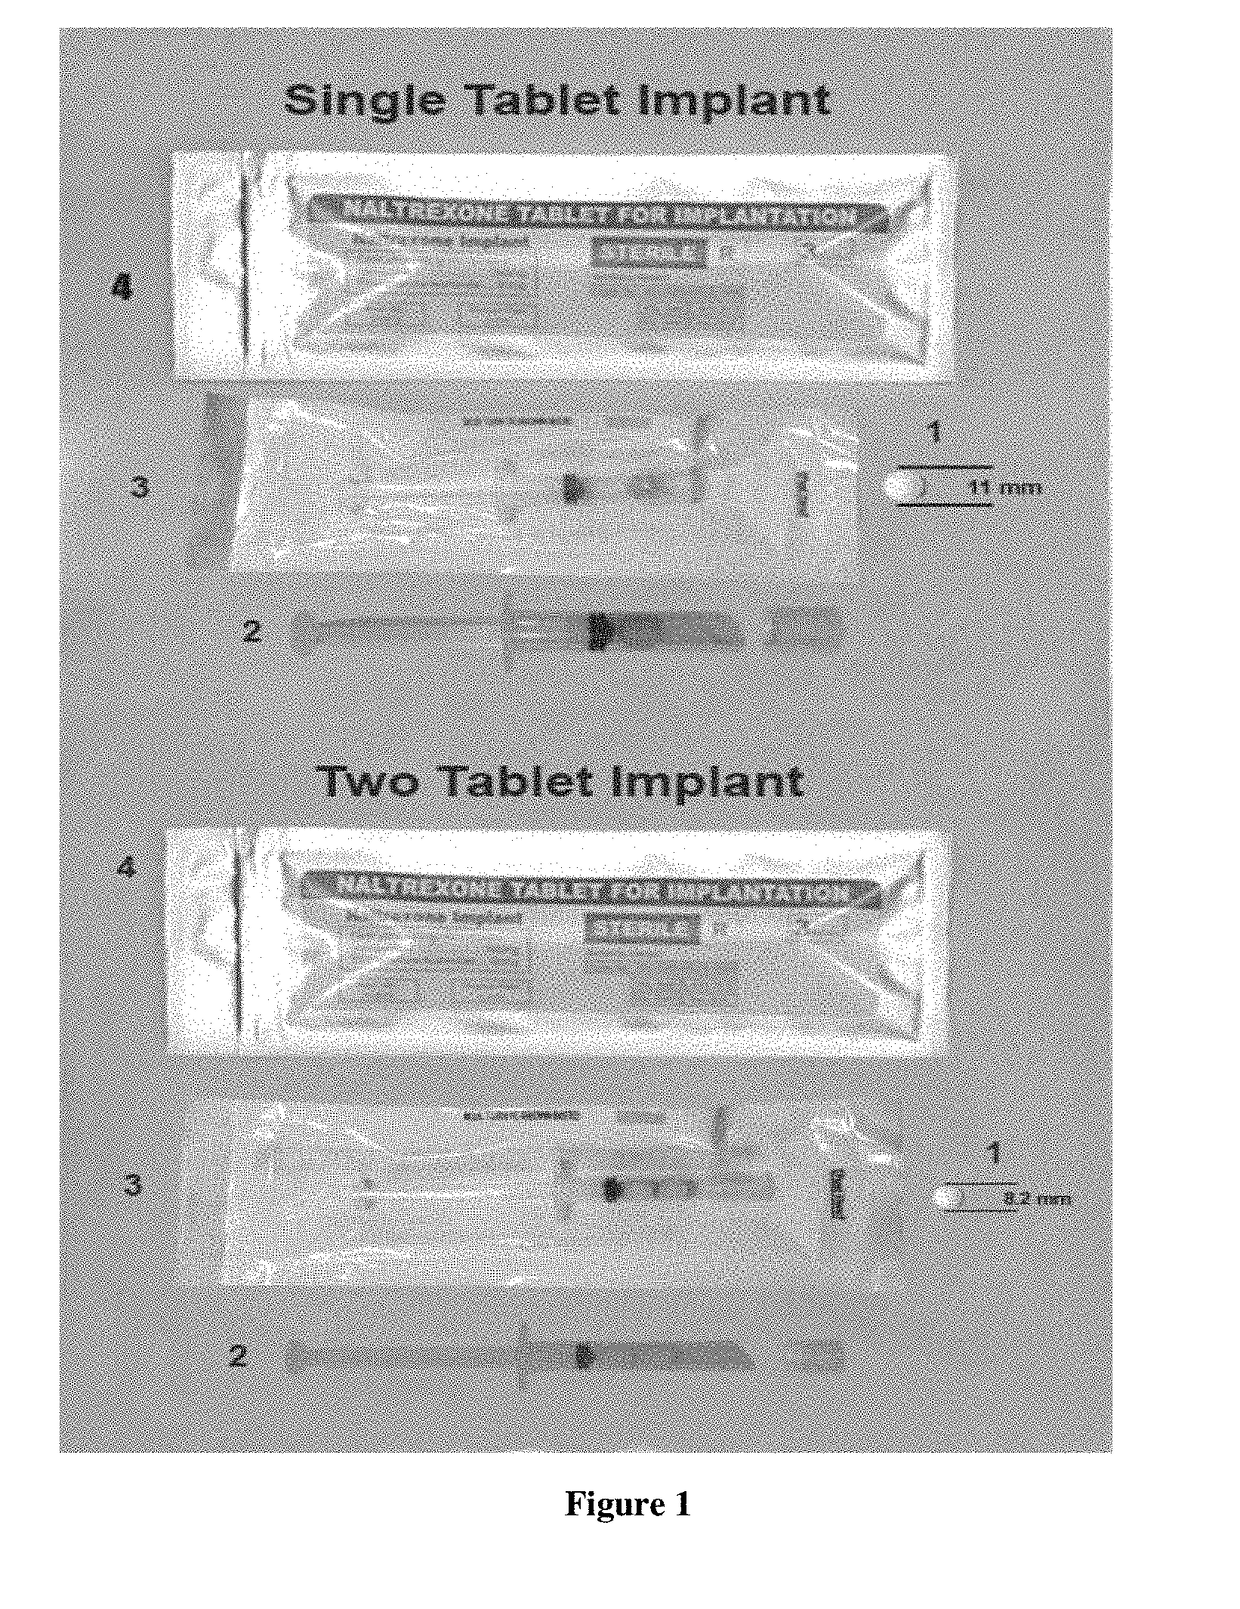 Implantable Naltrexone Tablets